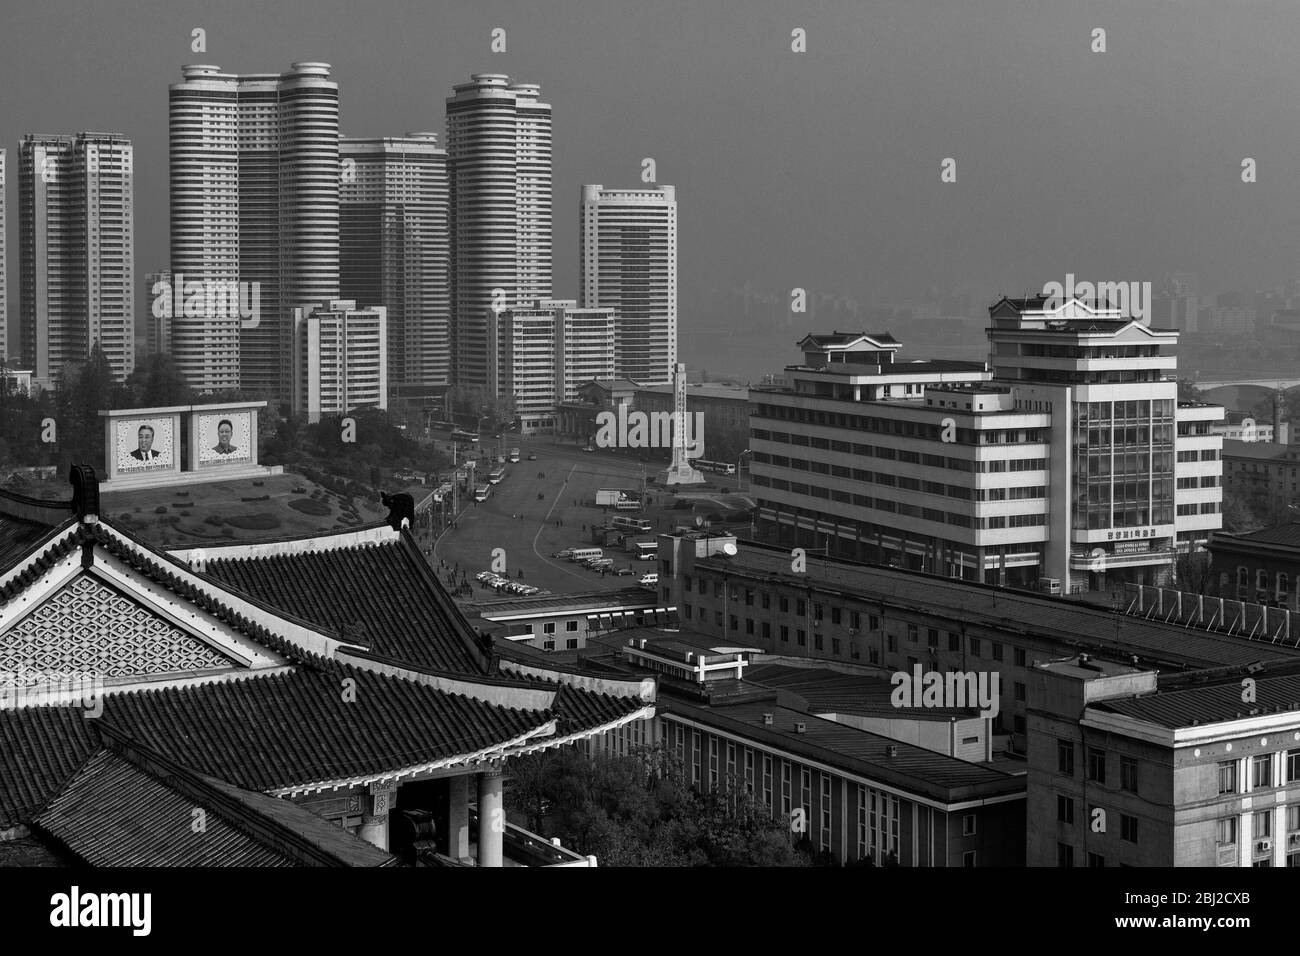 Pyongyang / DPR Korea - November 10, 2015: Modern apartment and office buildings in central Pyongyang, North Korea Stock Photo